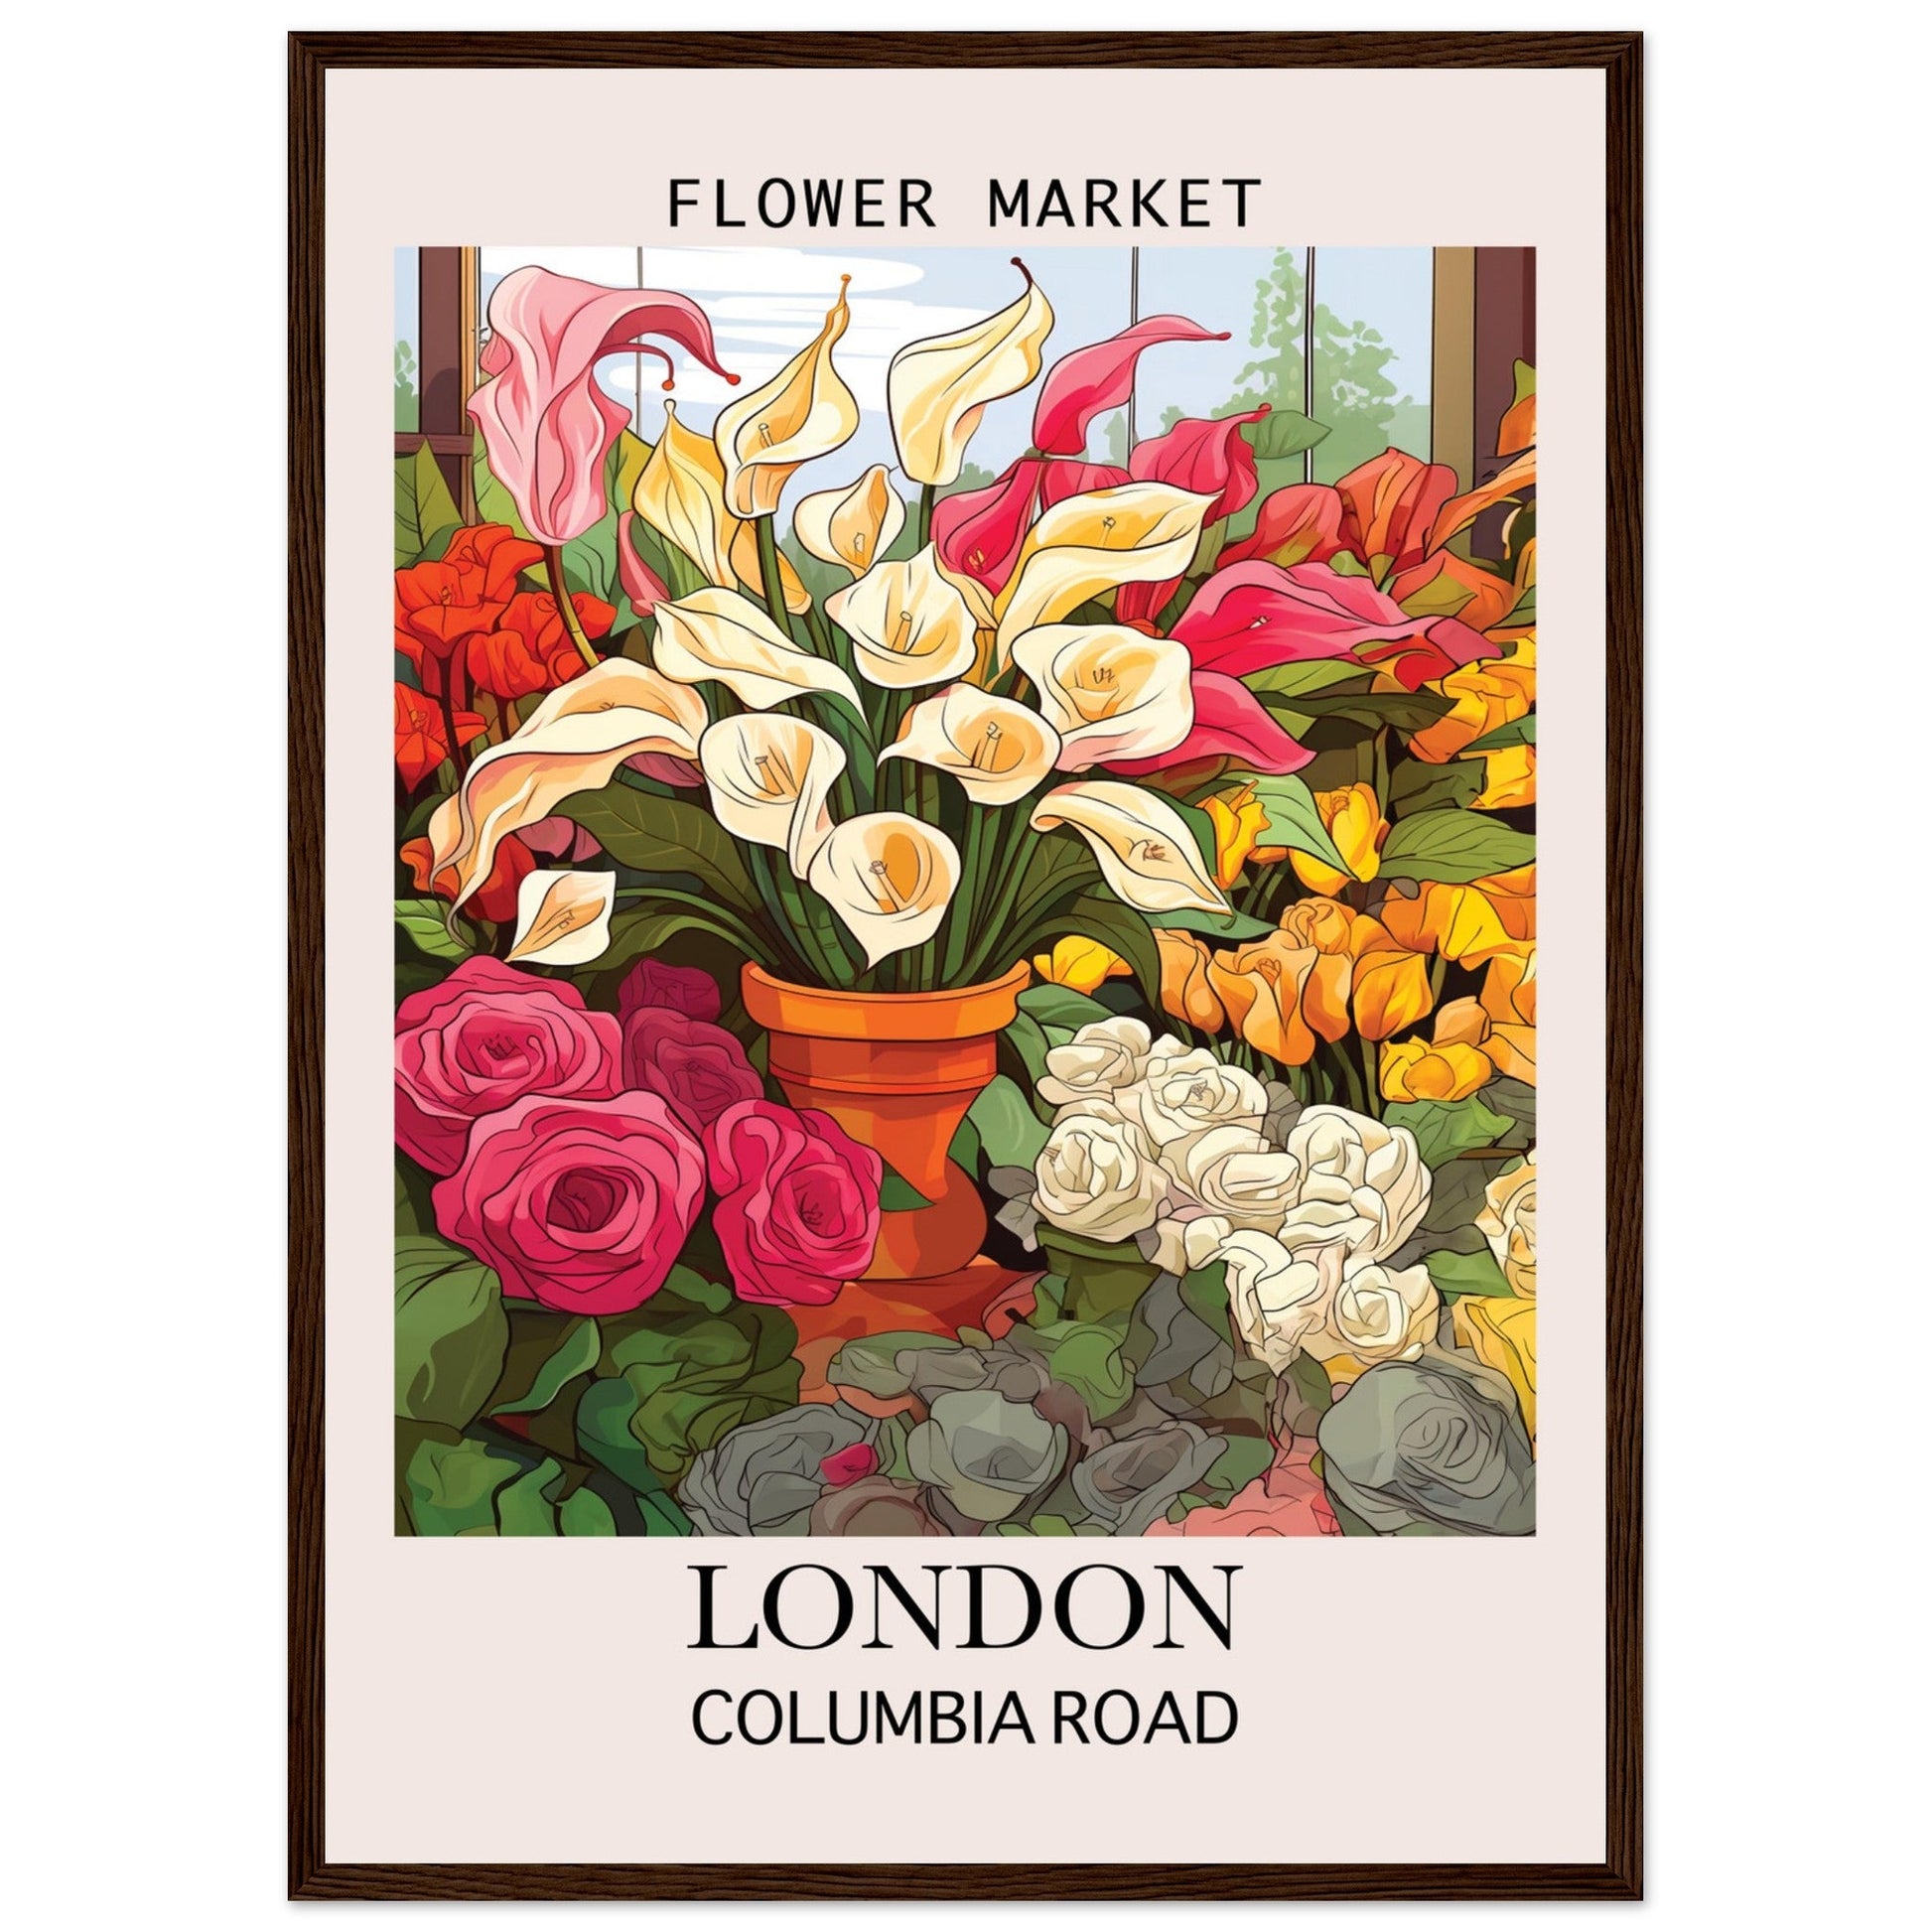 Flower Market Print, London - Framed Poster, Columbia Road, Flower Market, London, #illieeart